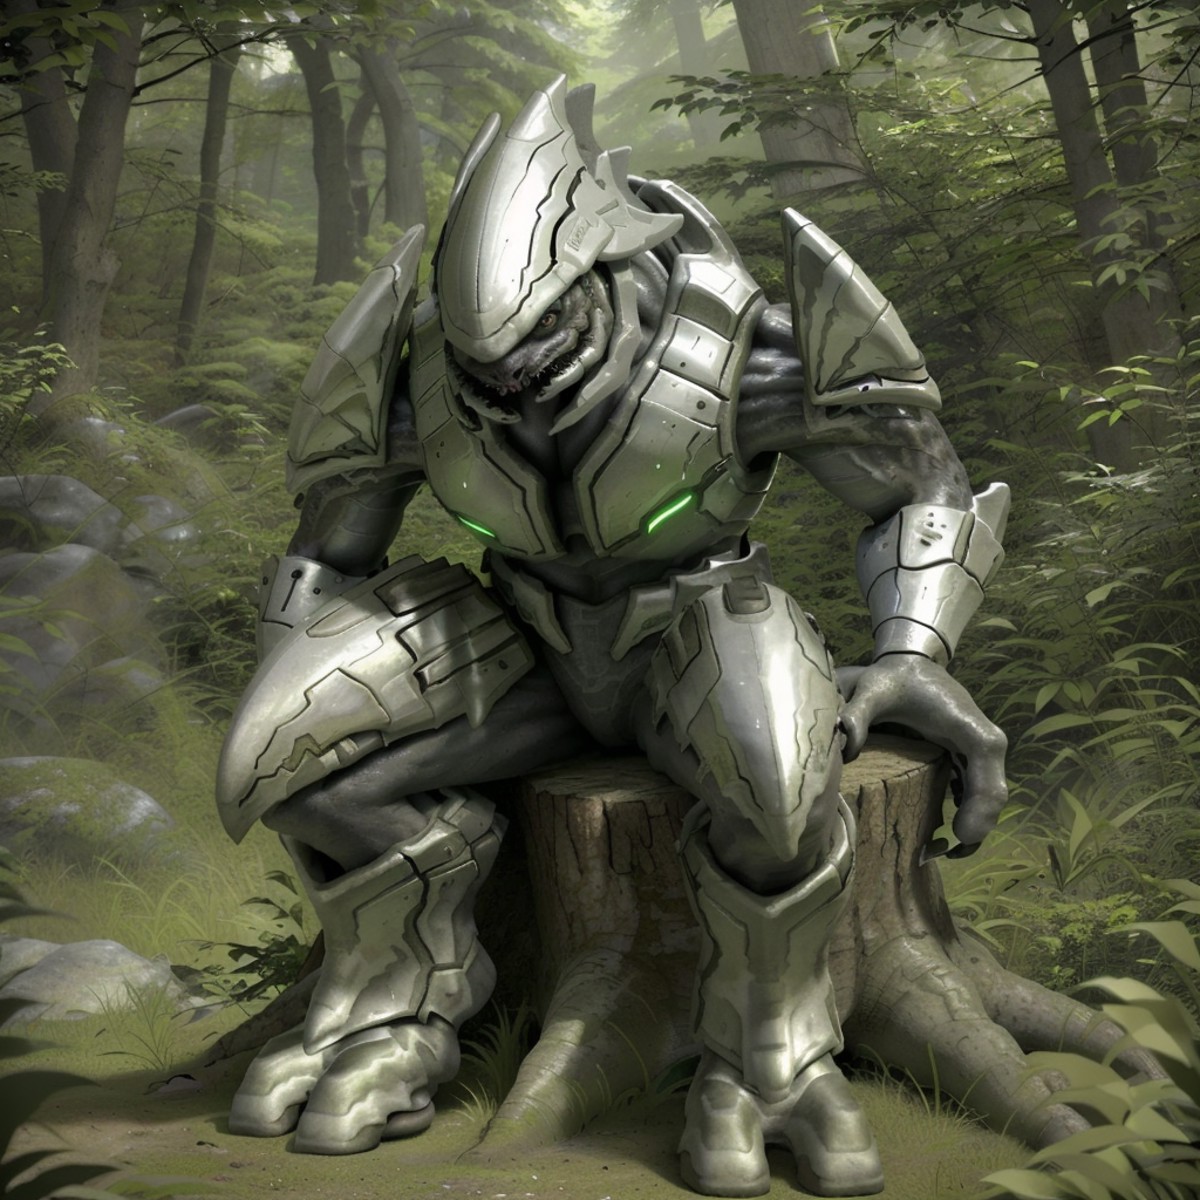 sangheili, alien, armor, white armor, helmet, best quality, masterpiece, detailed, full body, sitting on tree stump, looki...